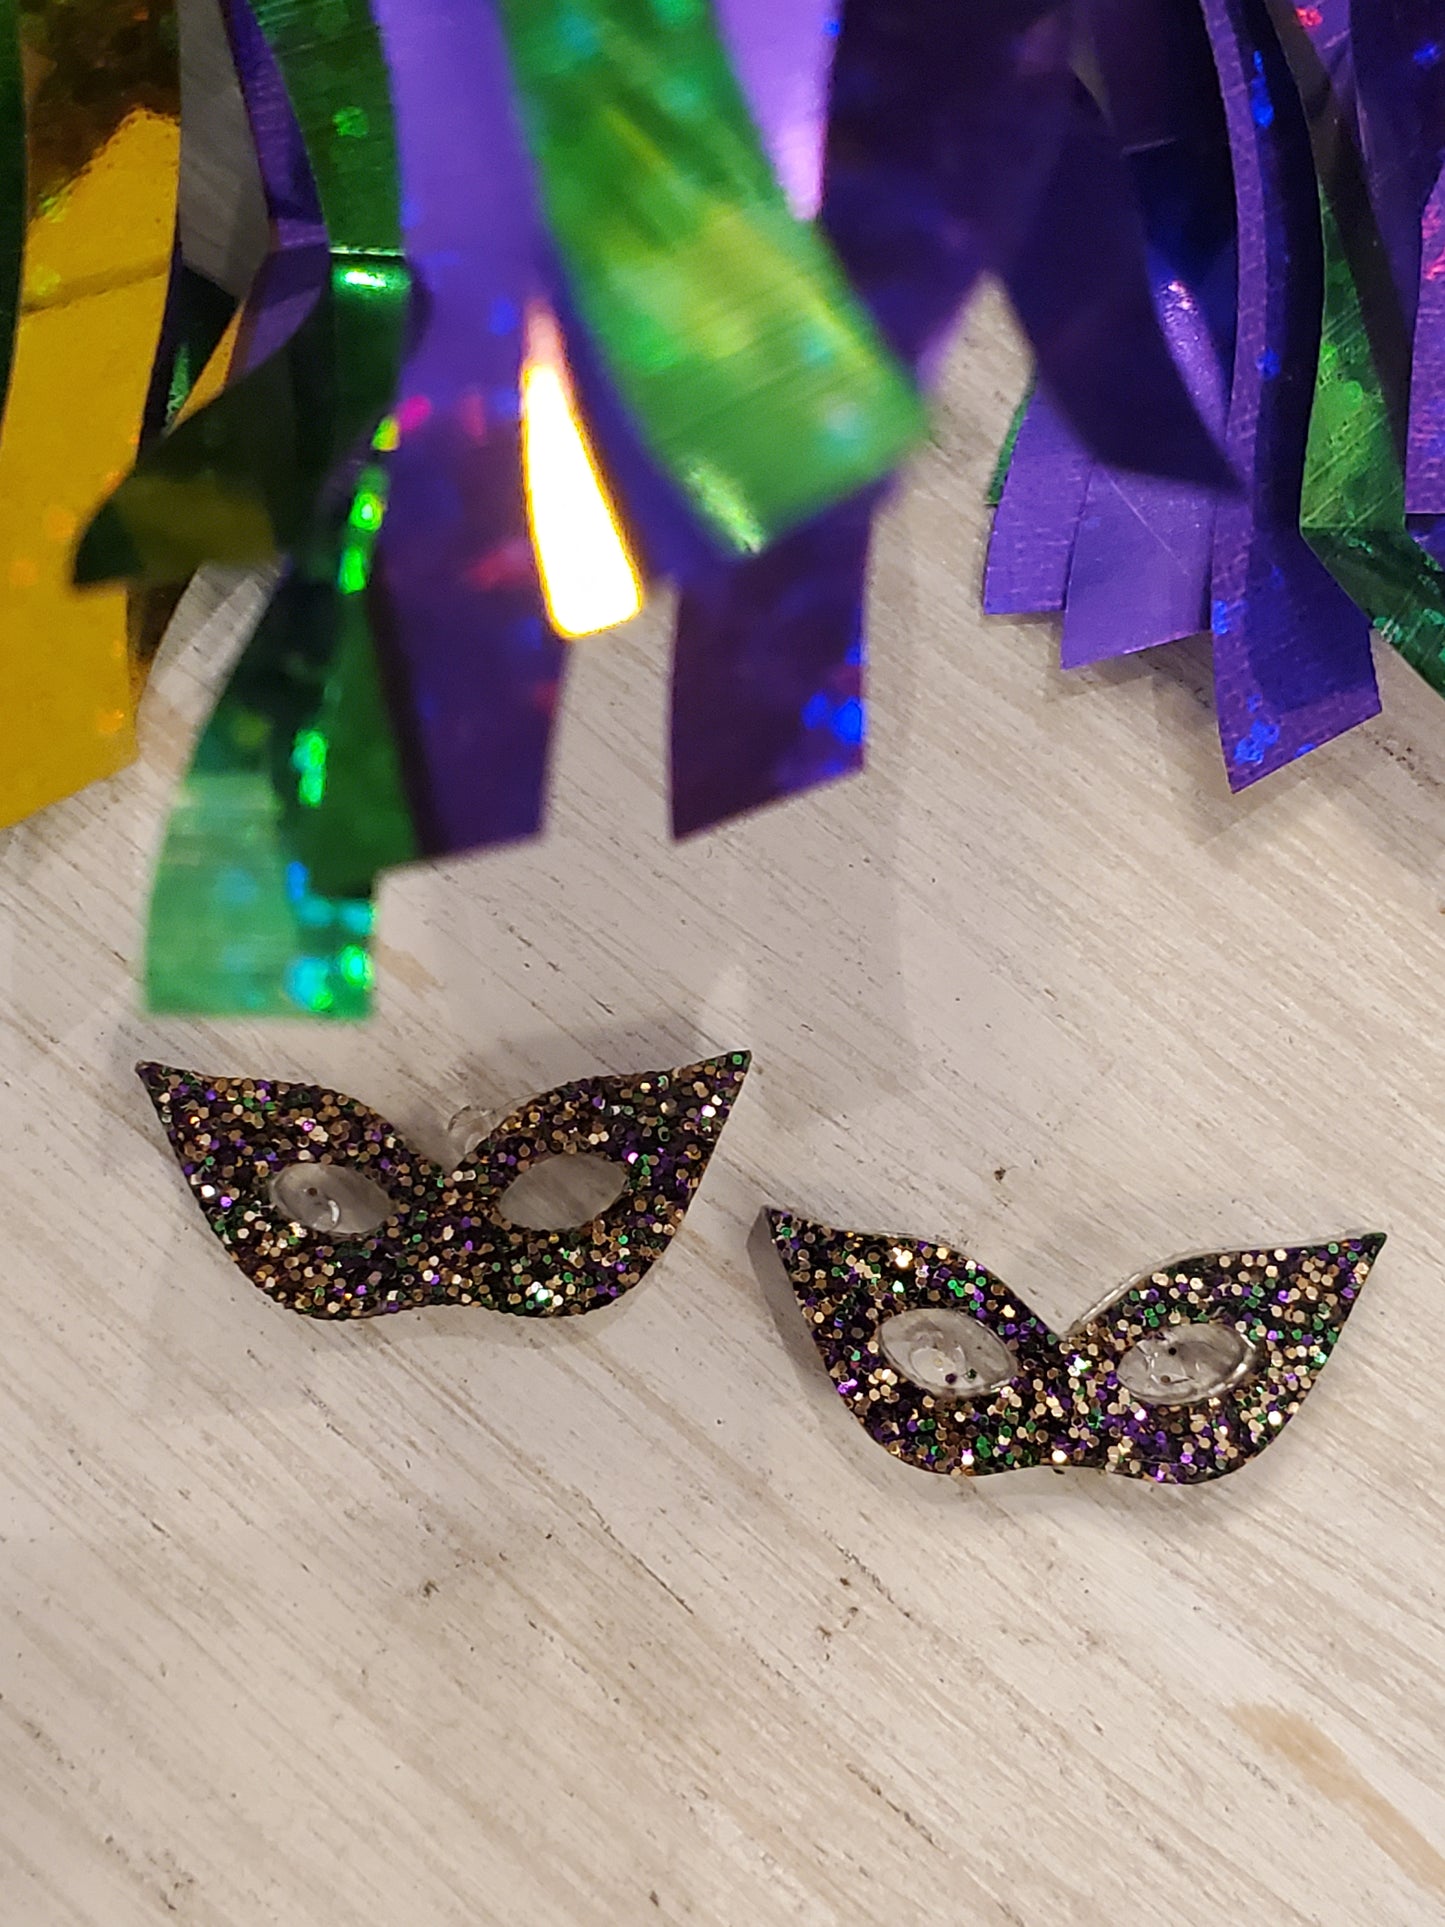 Handmade resin and glitter Mardi Gras Mask earrings small studs